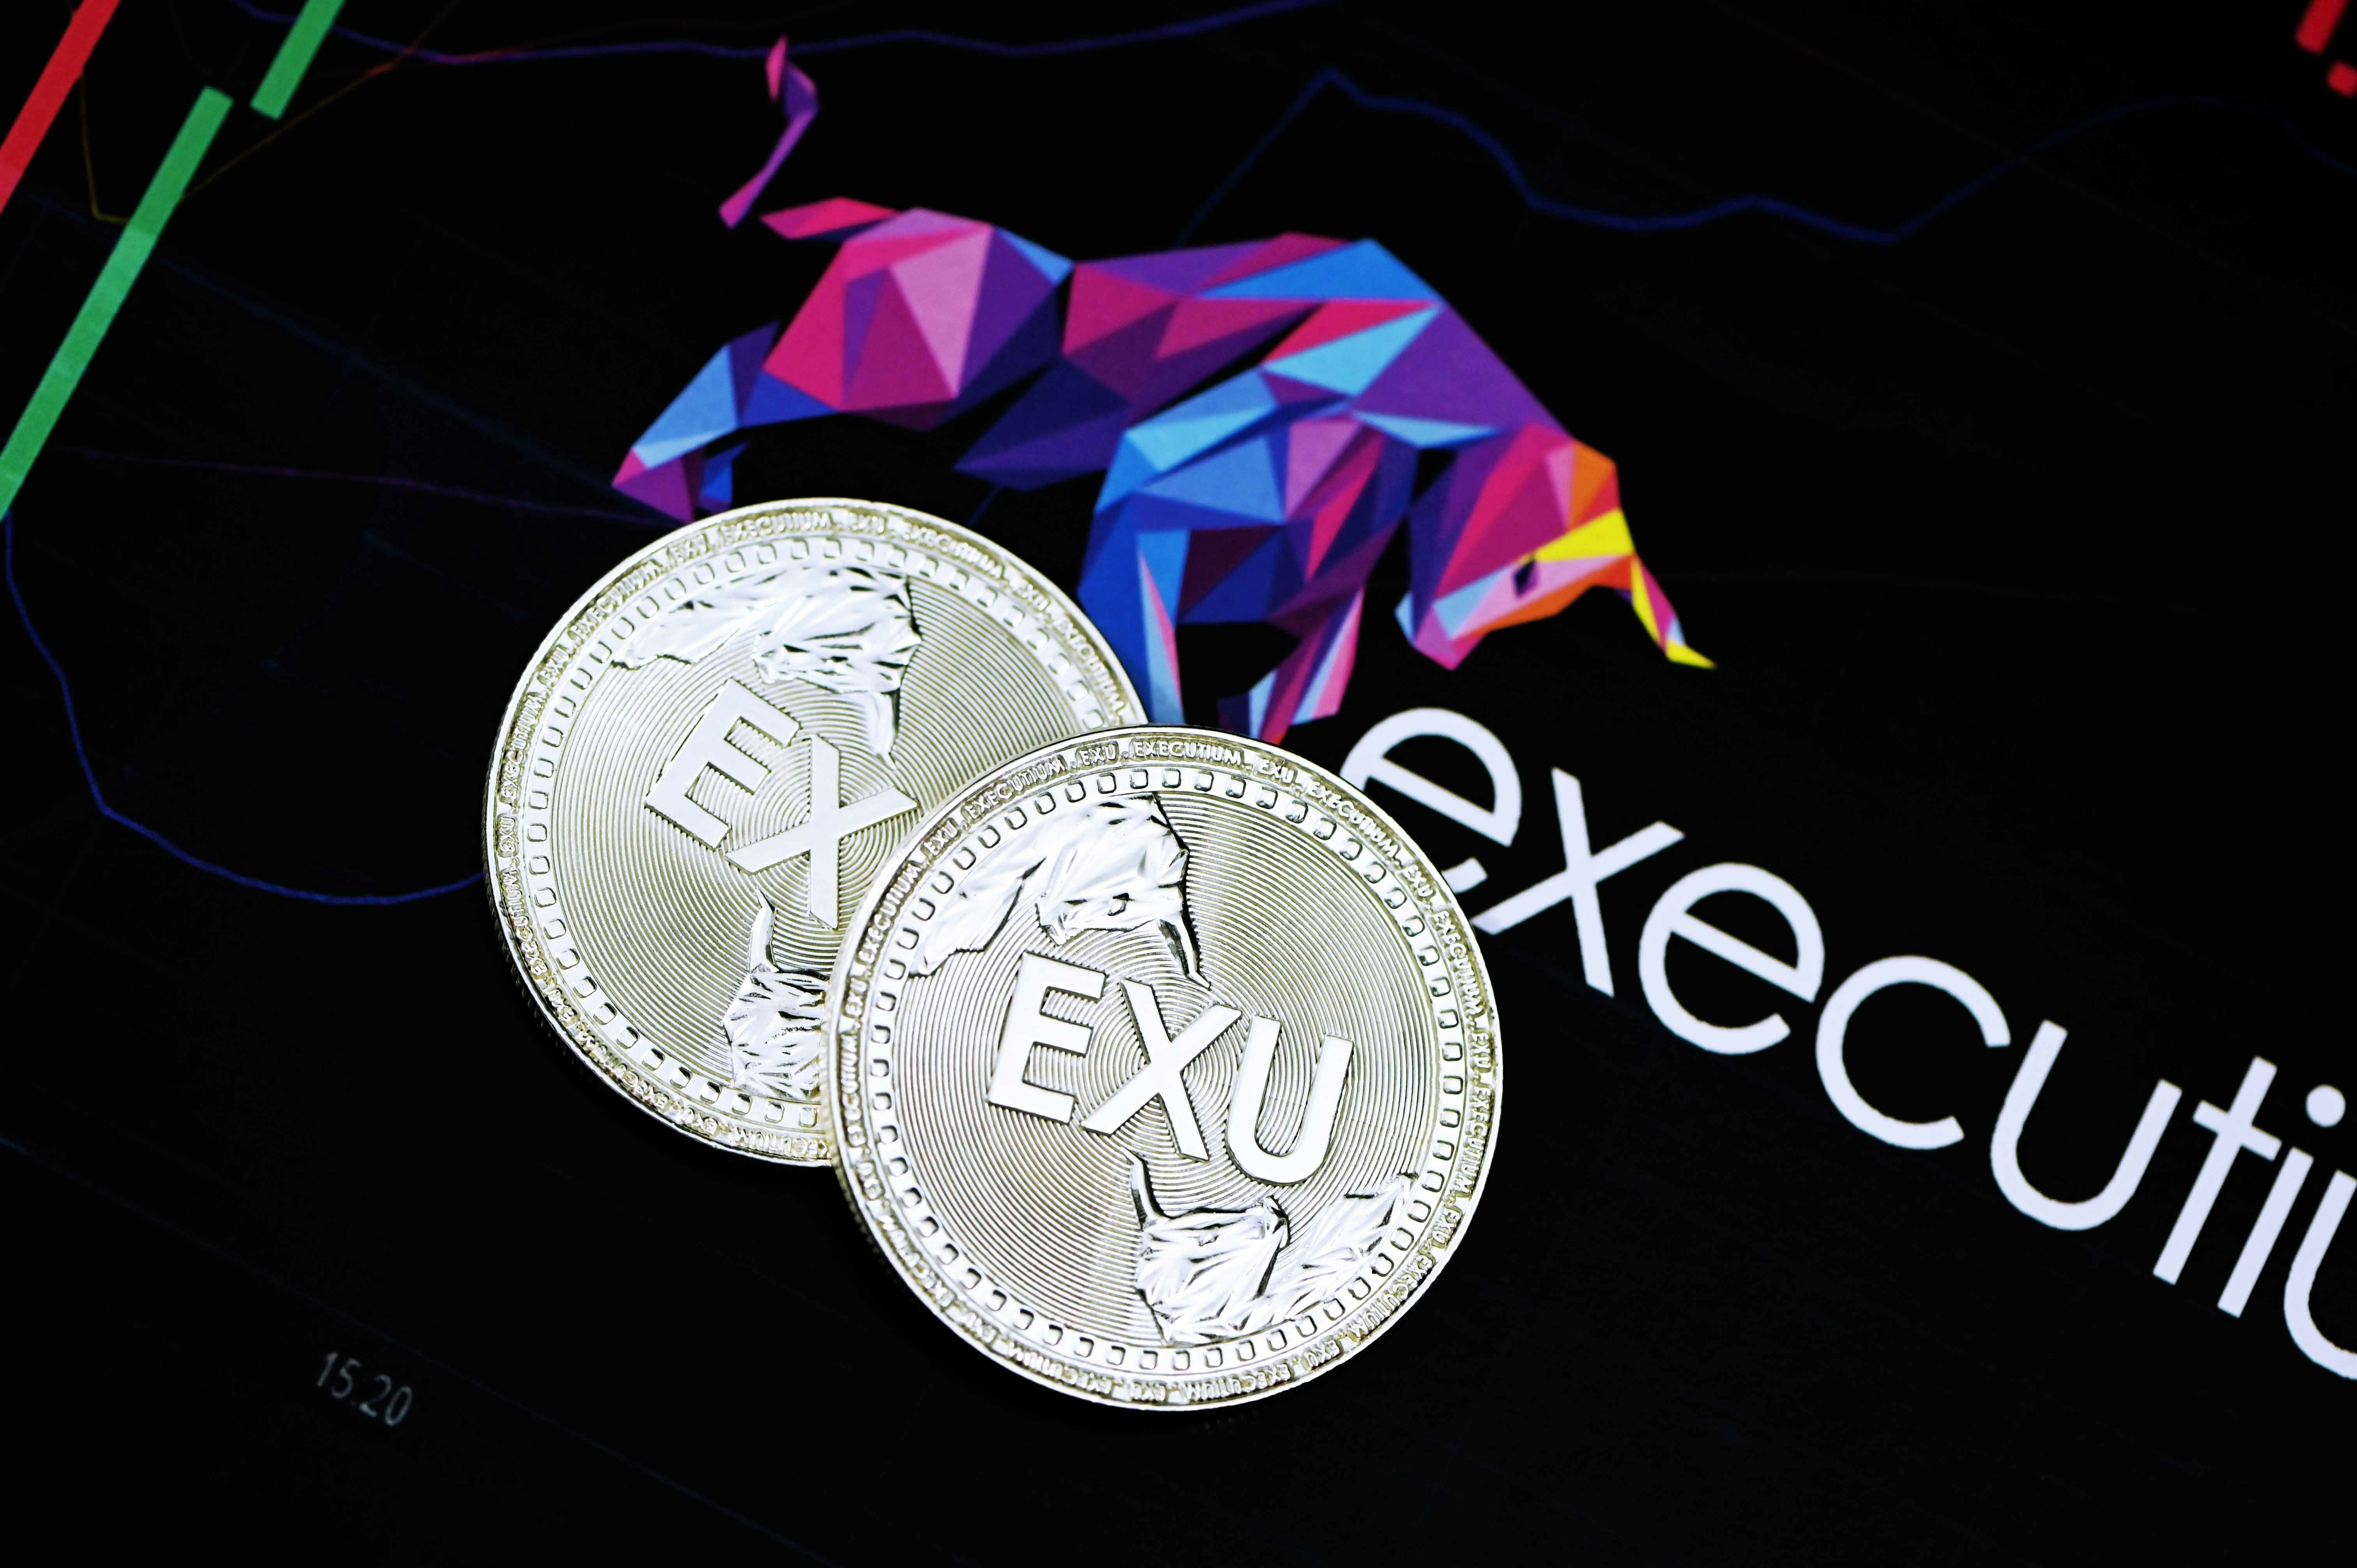 Two Executium coins with the Executium logo